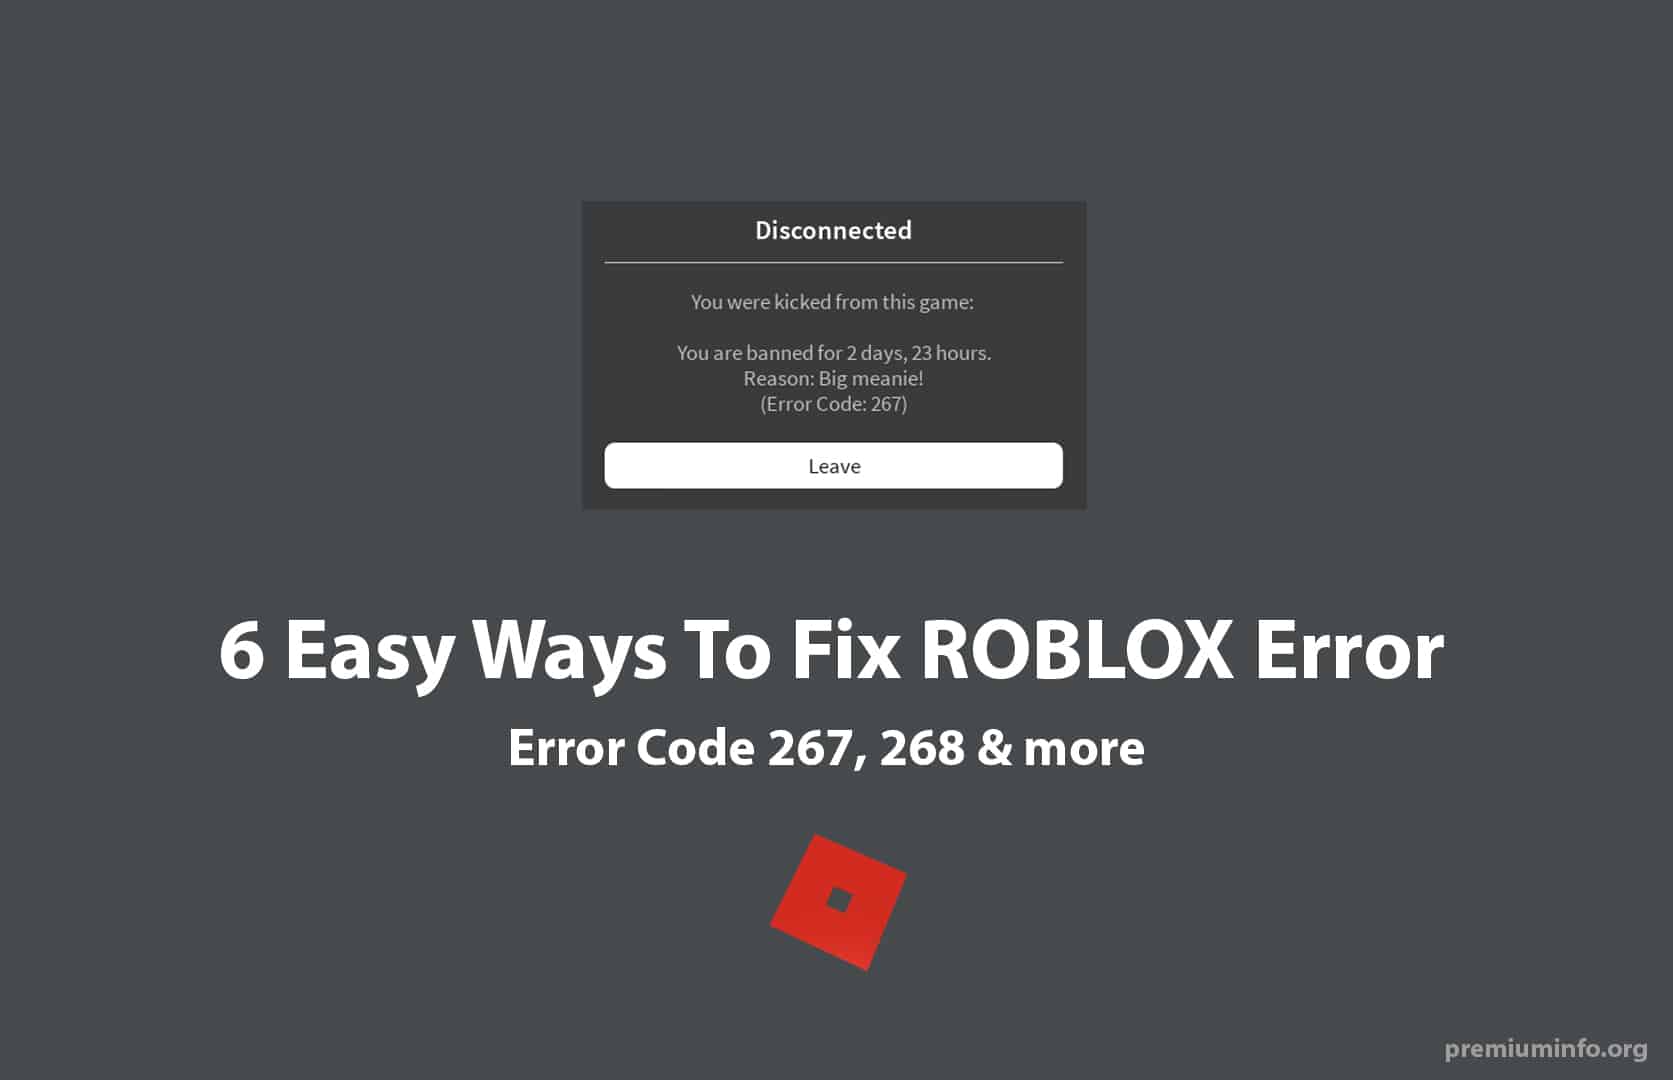 Fixed 6 Ways To Fix Roblox Error Code 267 Premiuminfo - disconnected roblox